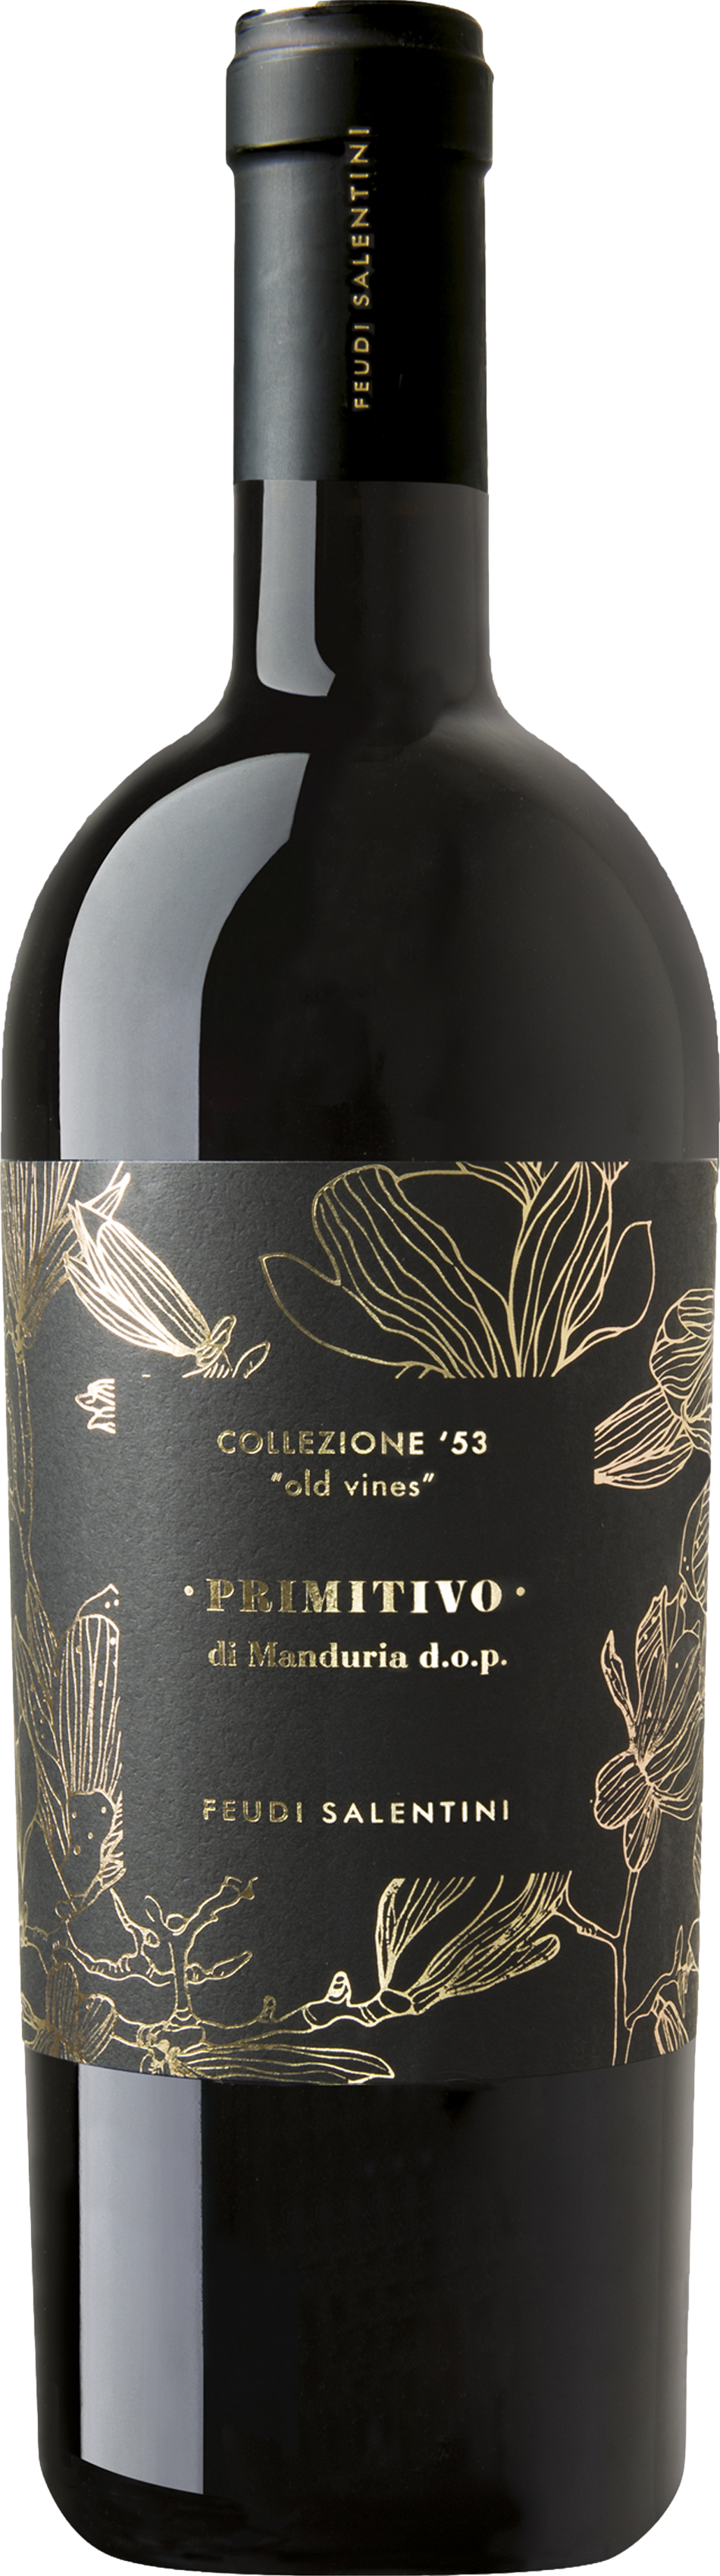 01/2019 günstig Kaufen-Feudi Salentini Collezione 53 Old Vines Primitivo di Manduria 2019. Feudi Salentini Collezione 53 Old Vines Primitivo di Manduria 2019 . 